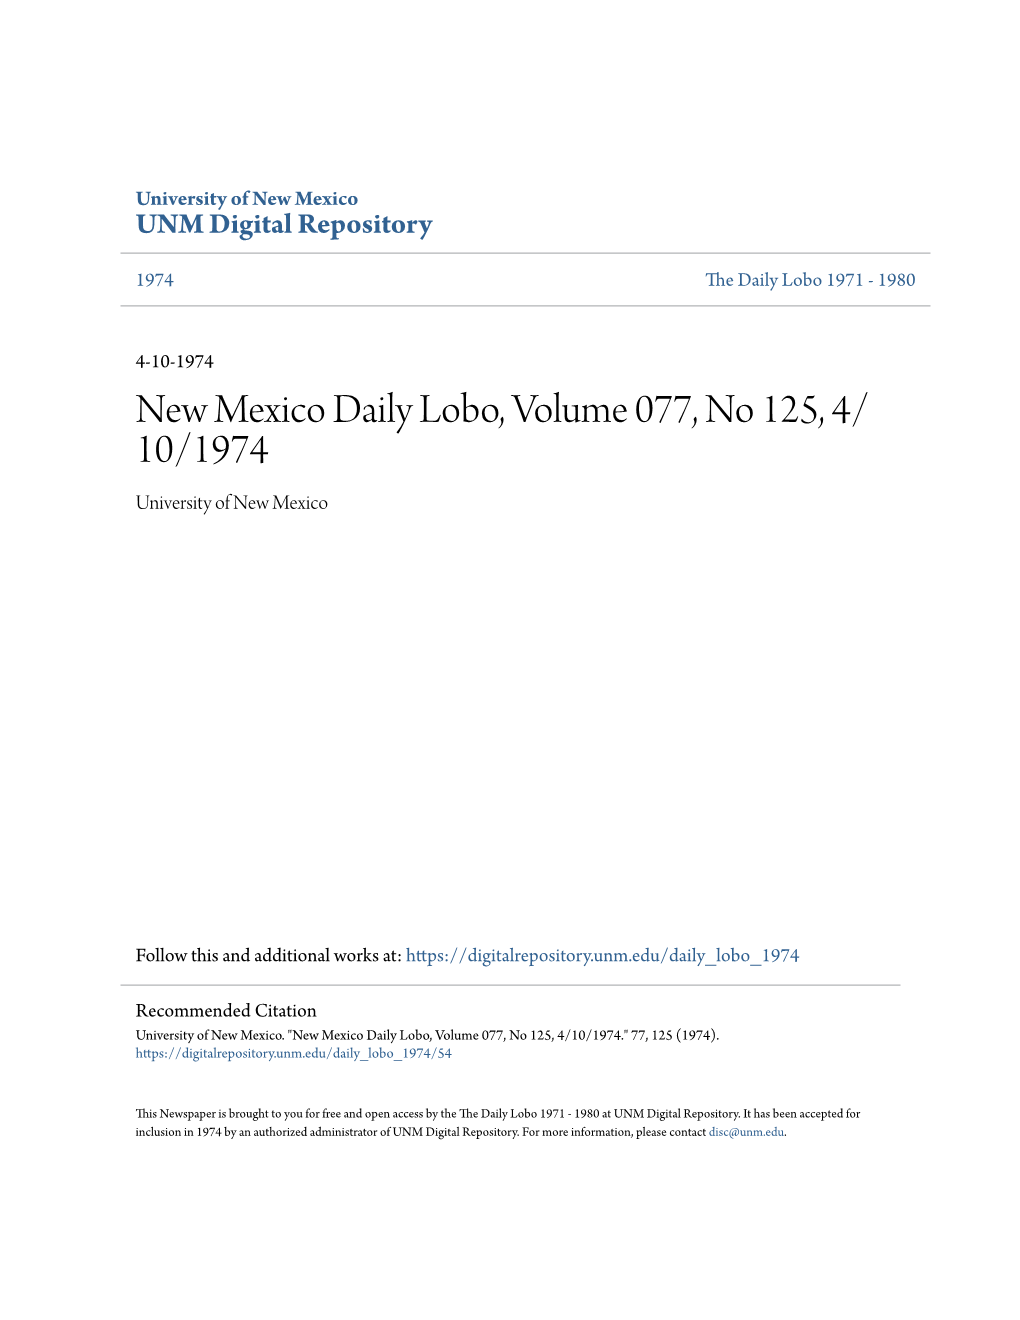 New Mexico Daily Lobo, Volume 077, No 125, 4/10/1974." 77, 125 (1974)